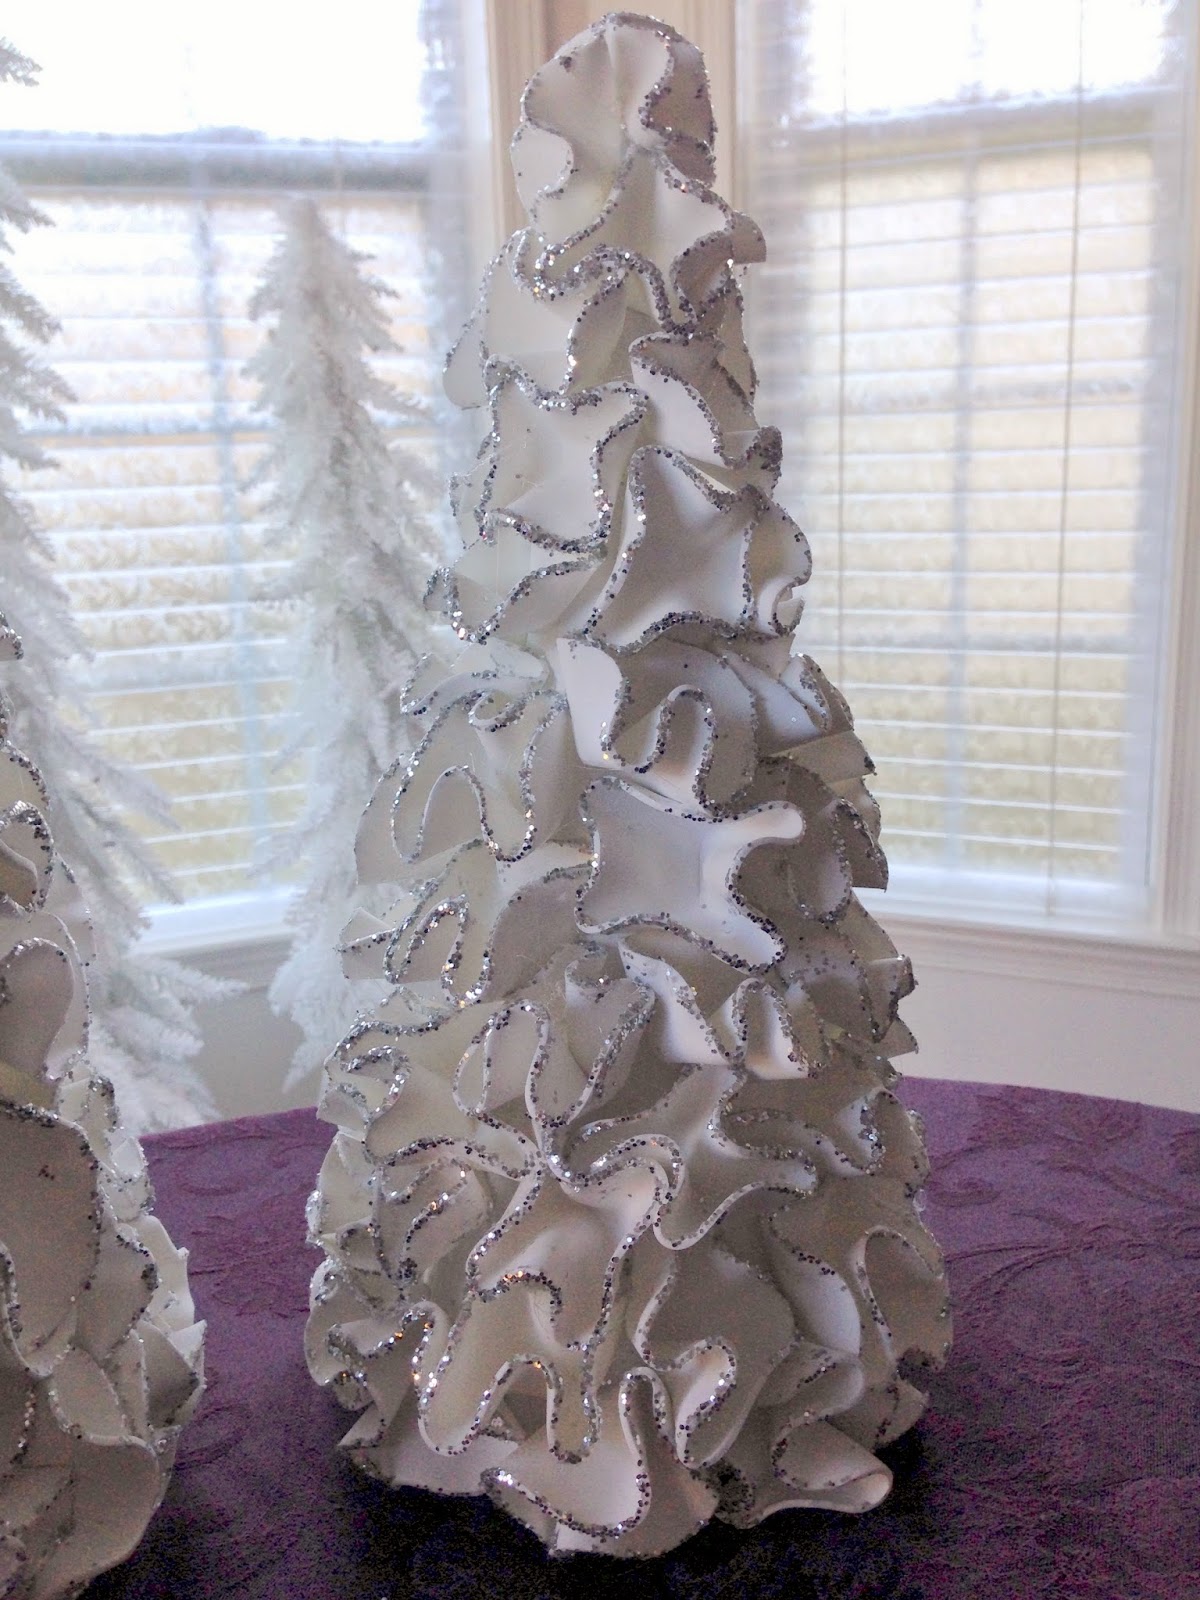 DIY Foam Cone Christmas Trees — WE MOVED! Visit ashleyburk.com